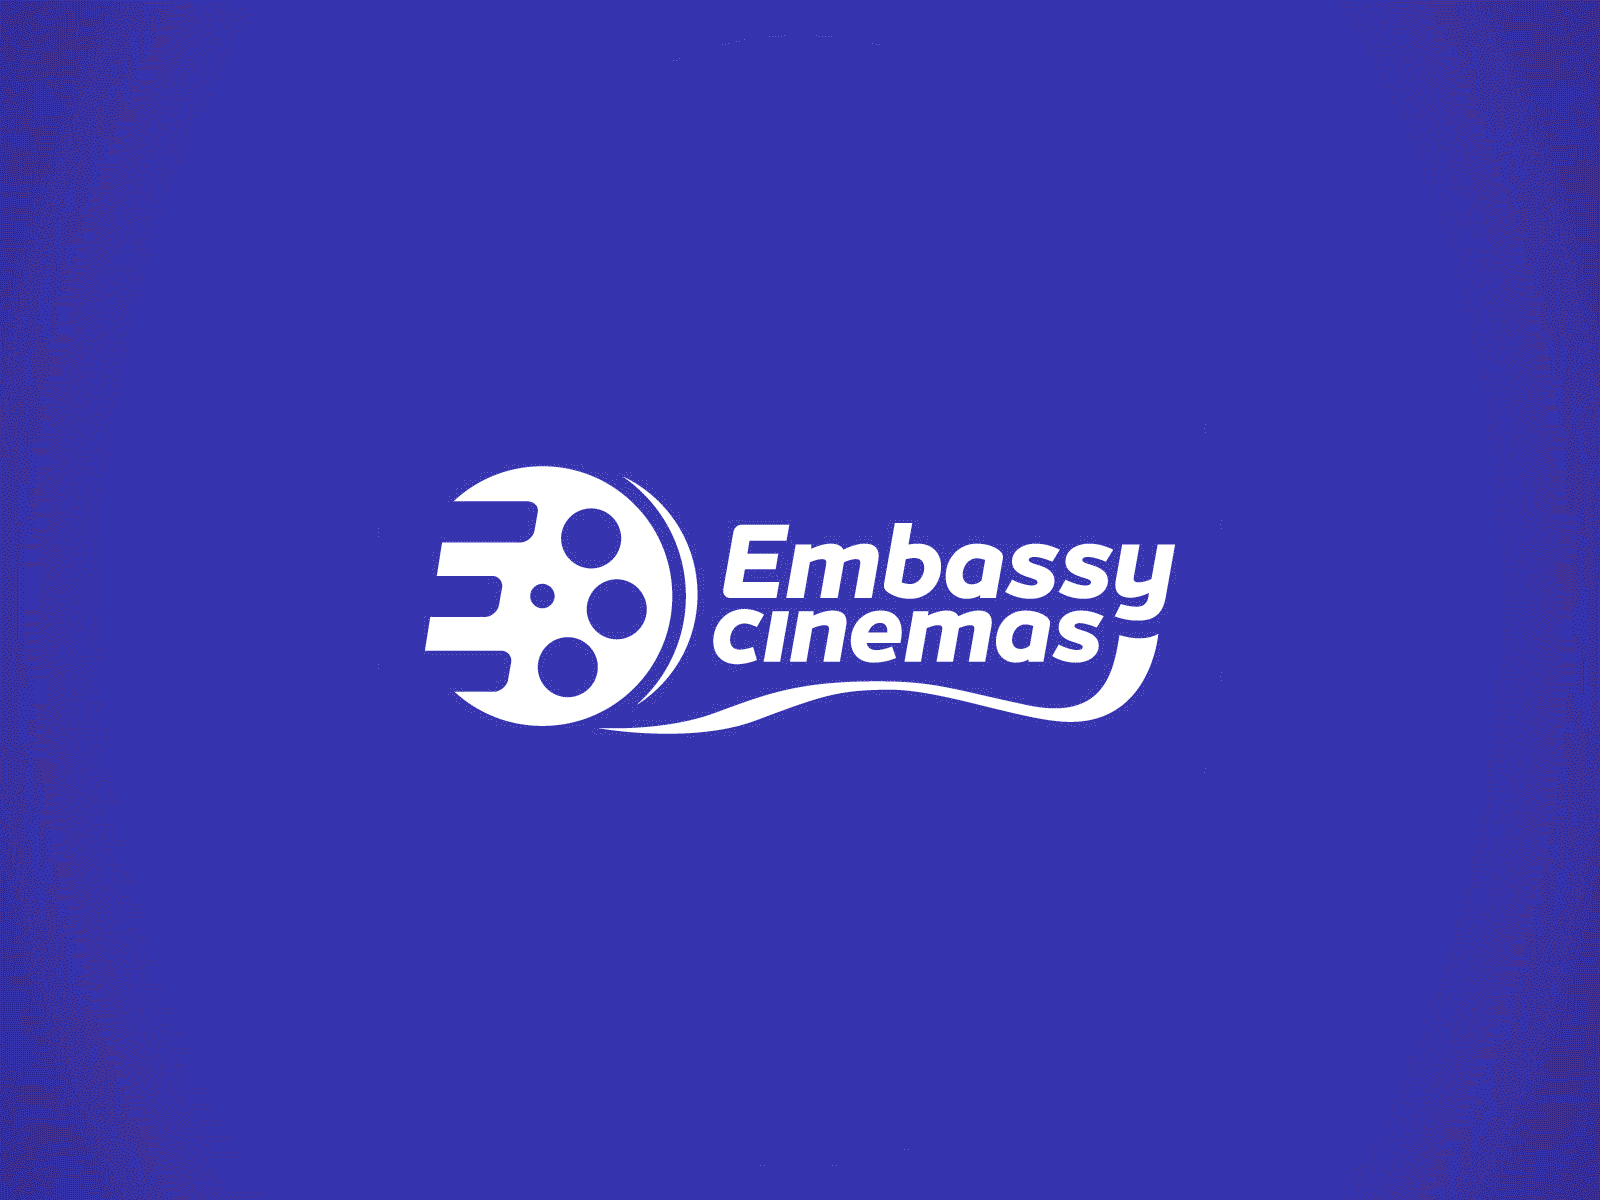 Embassy Cinemas | Brand Identity